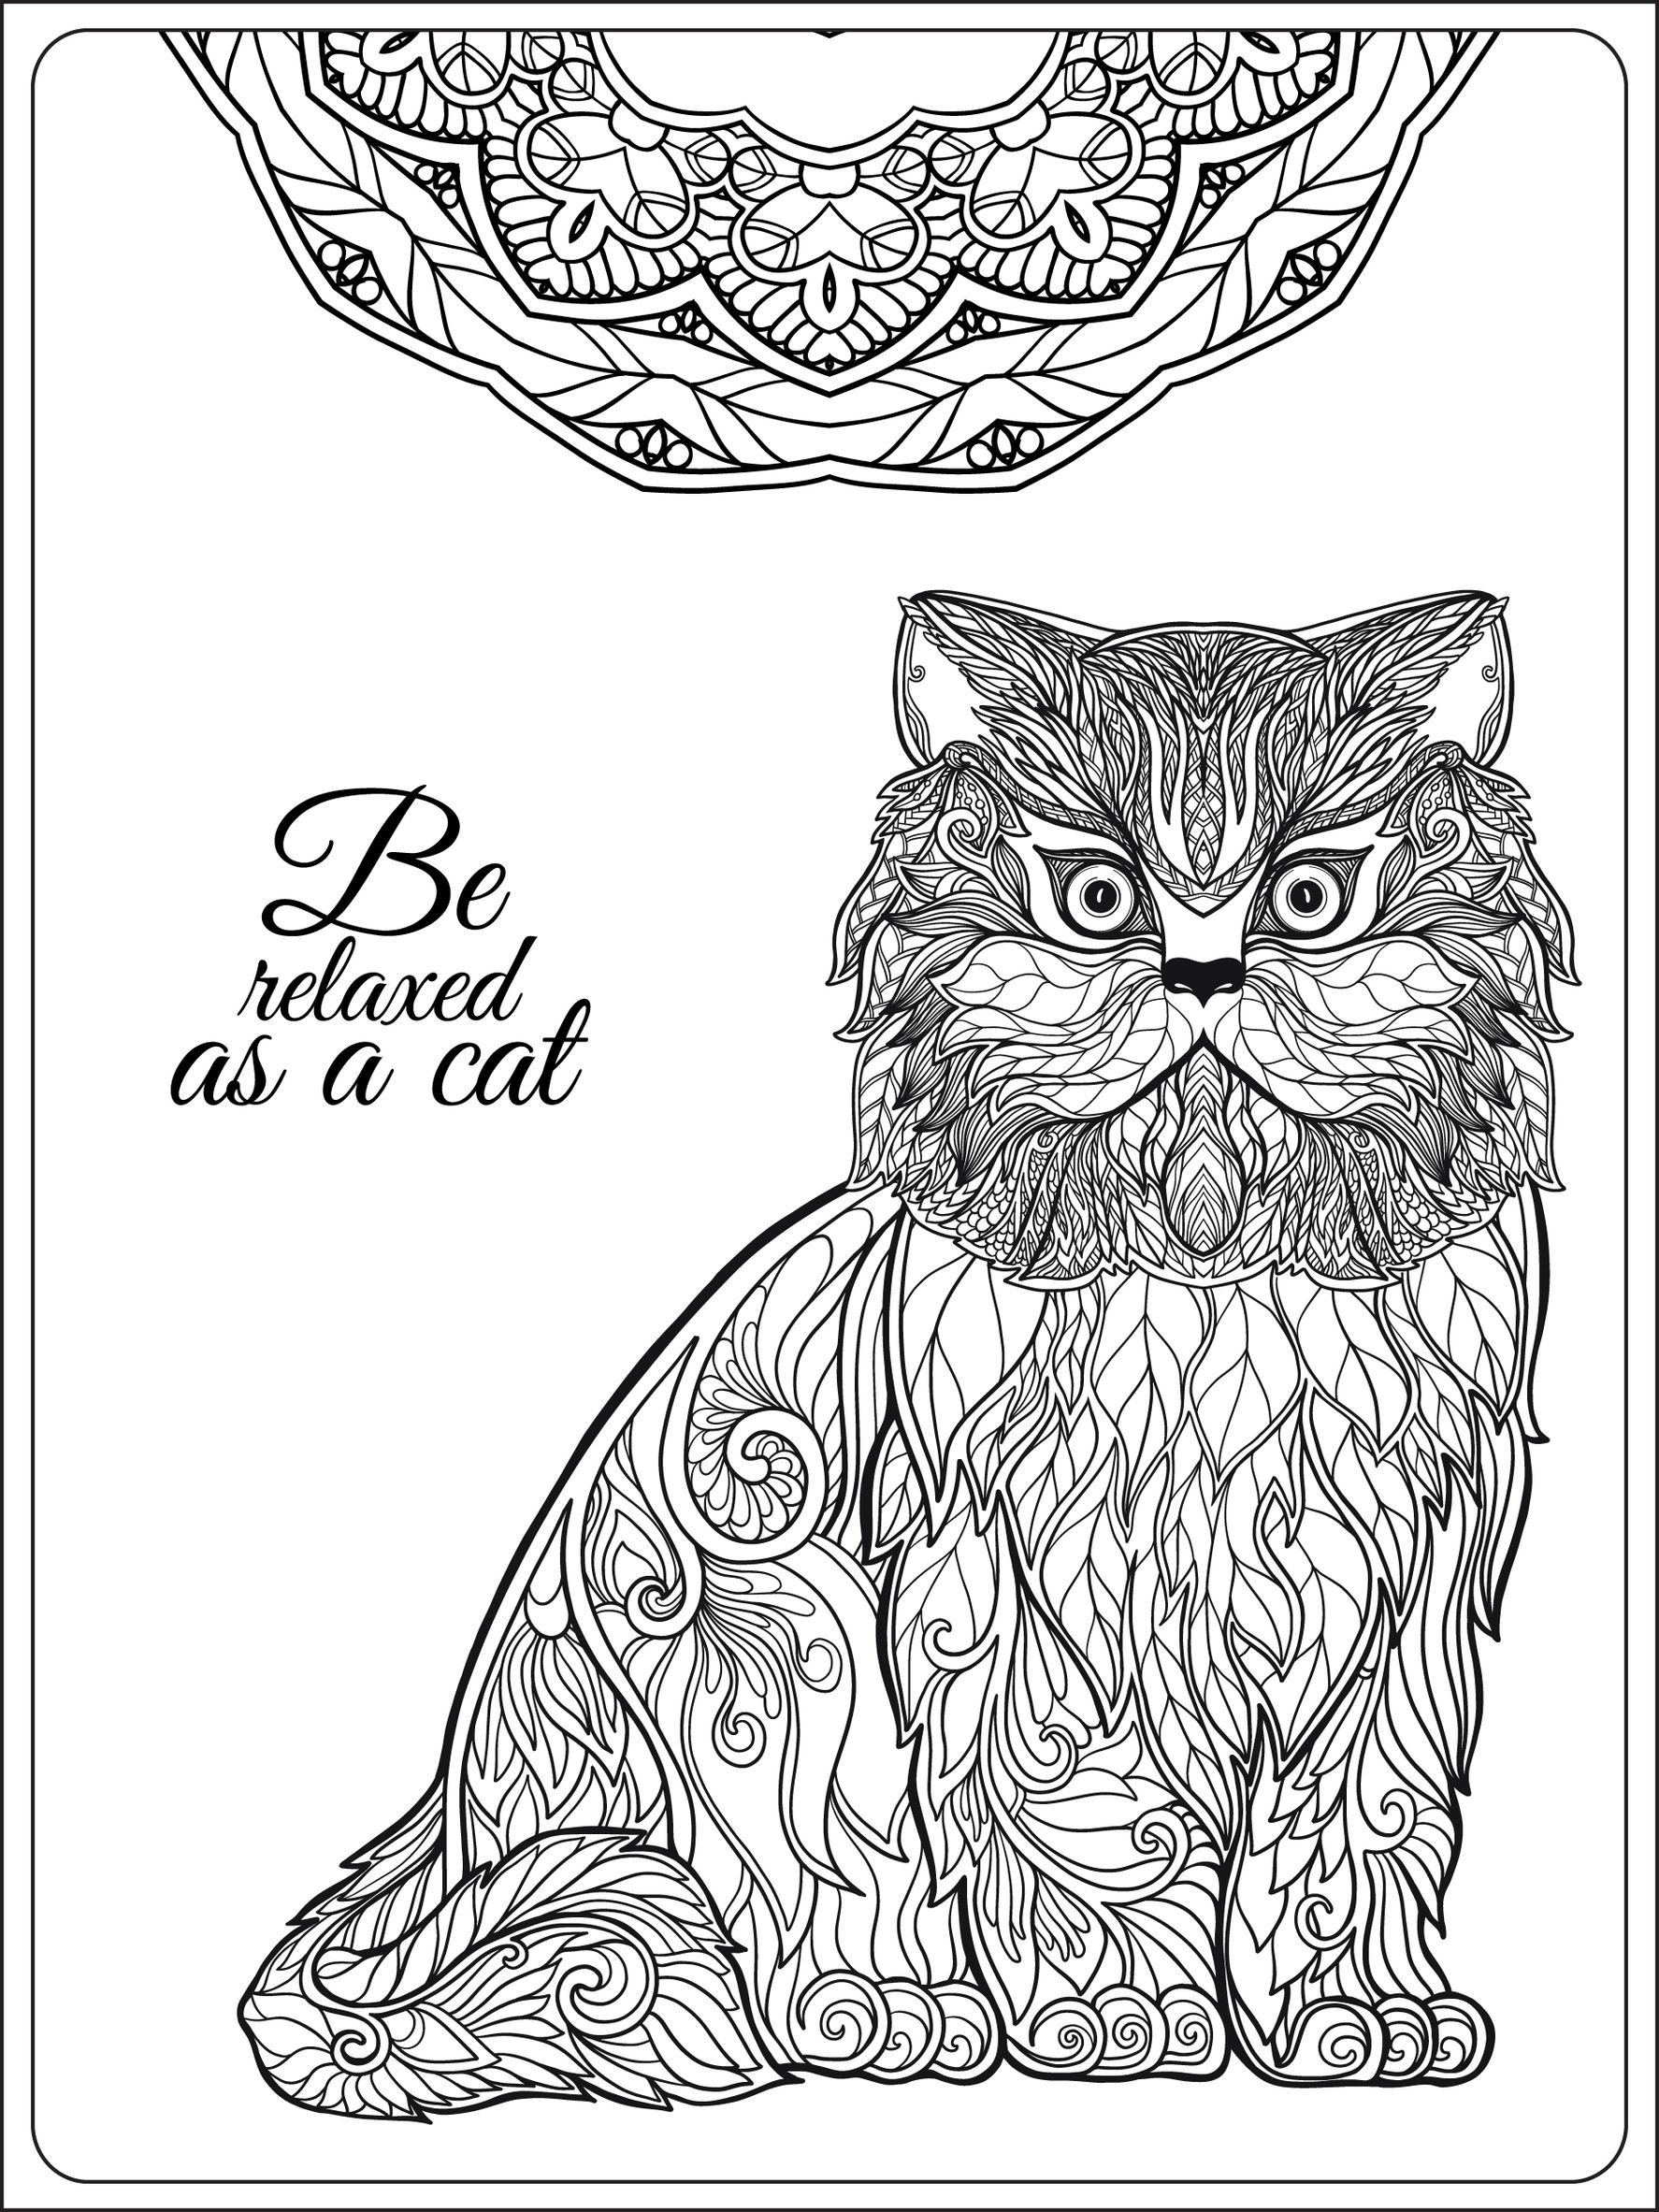 Desenhos simples para colorir gratuitos de Gatos para baixar - Gatos -  Coloring Pages for Adults